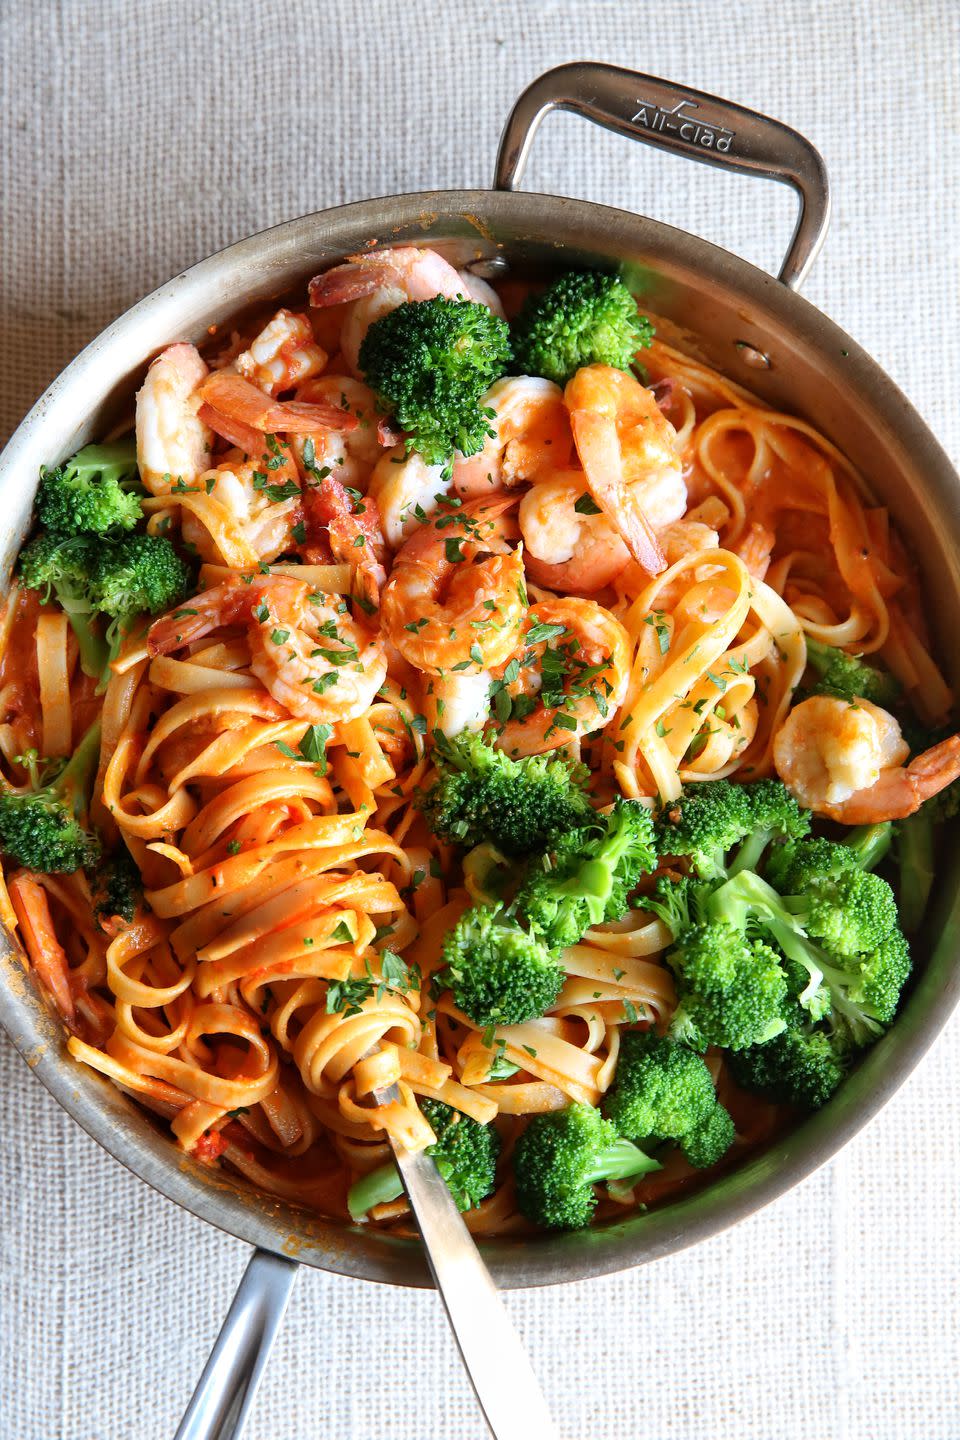 Shrimp and Broccoli Fettuccine